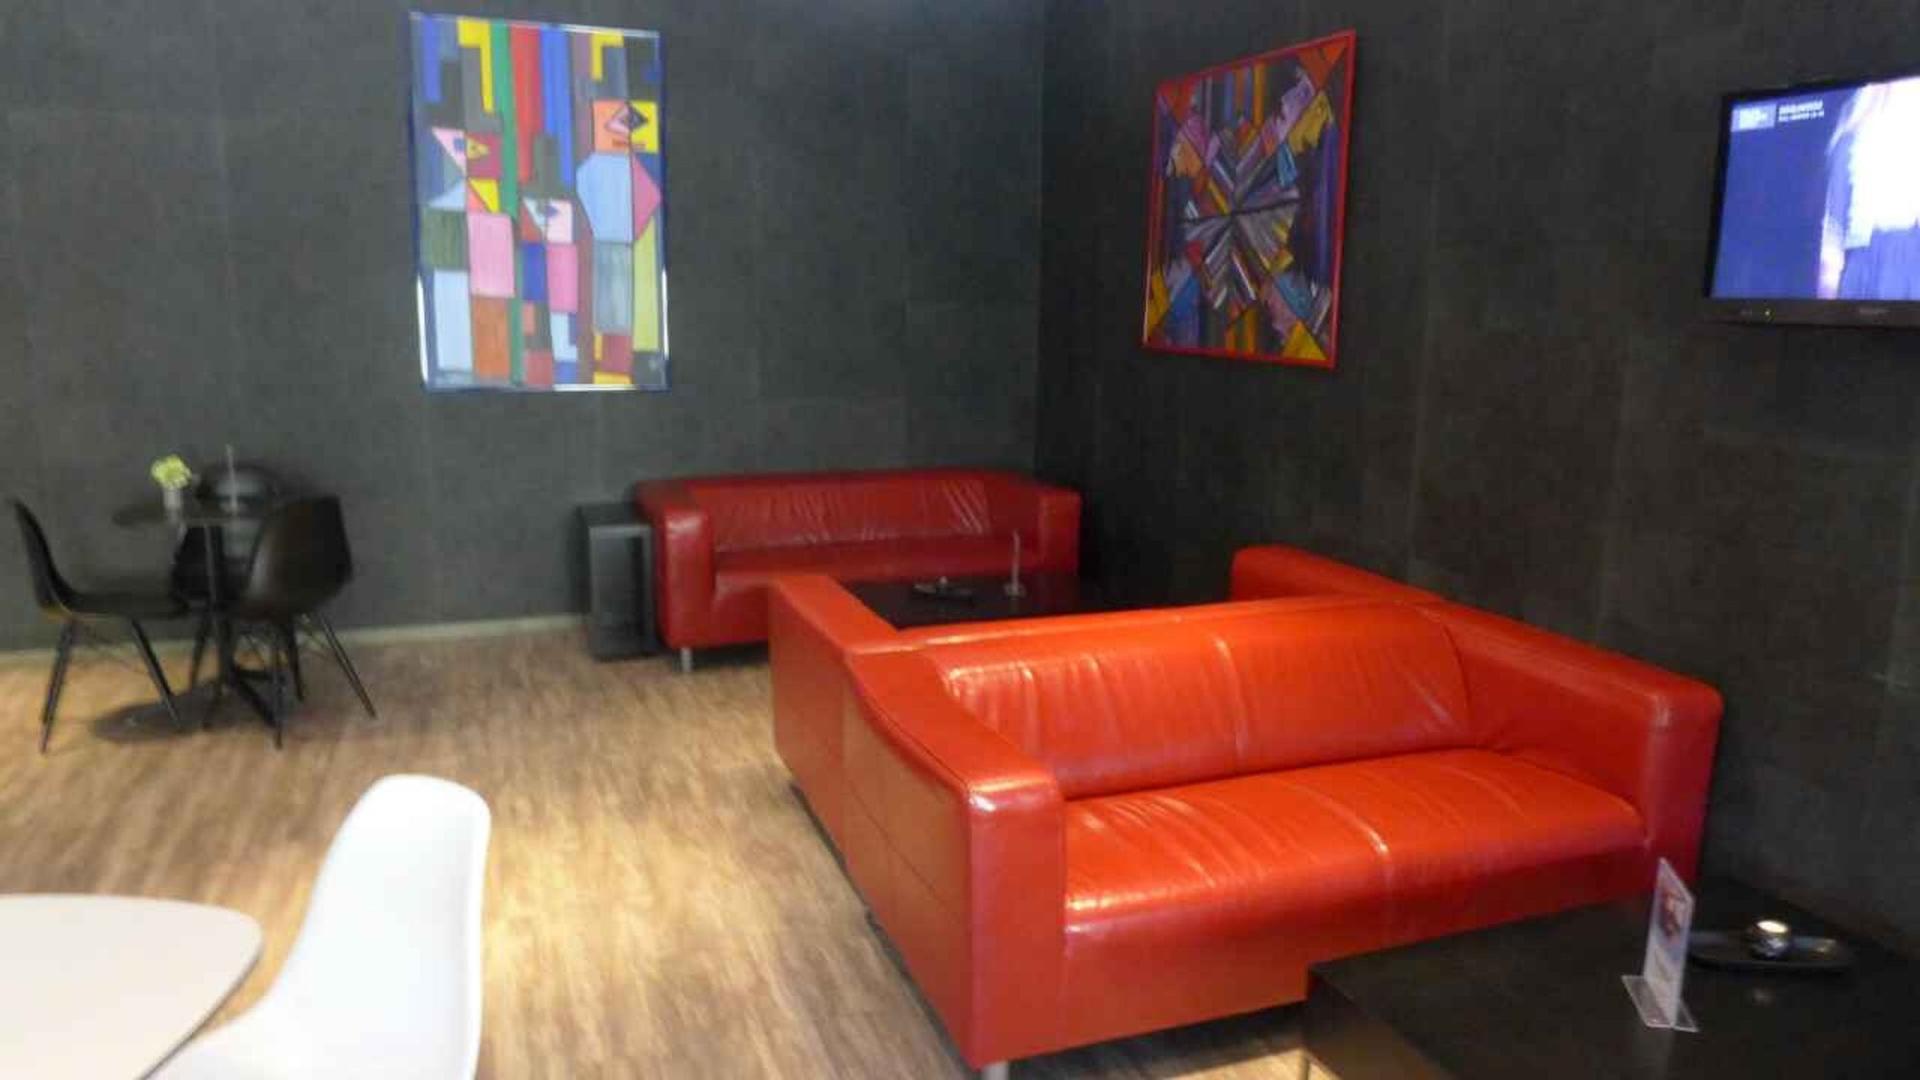 Swissport Filoxenia Lounge image 2 of 5